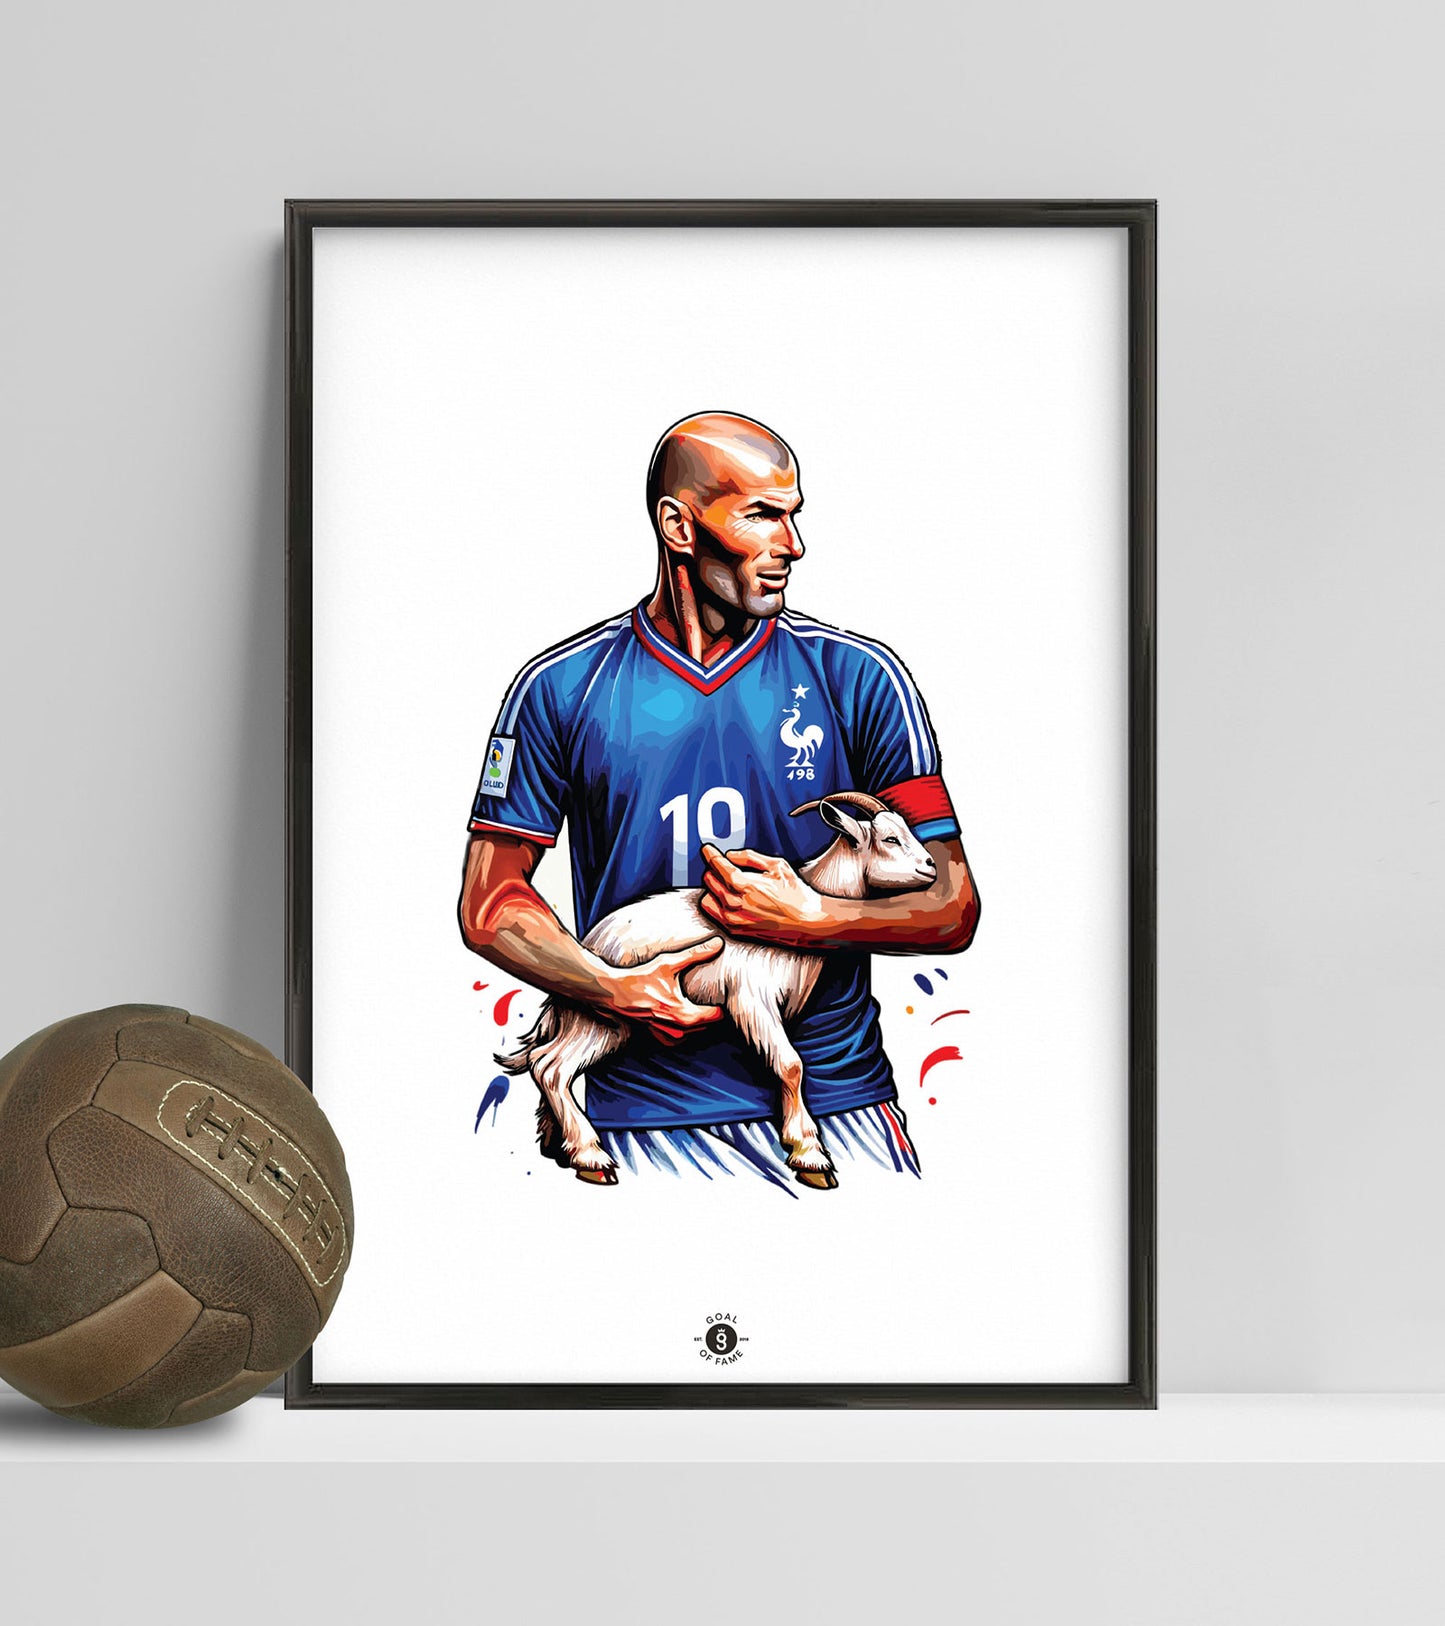 Zidane is the G.O.A.T.